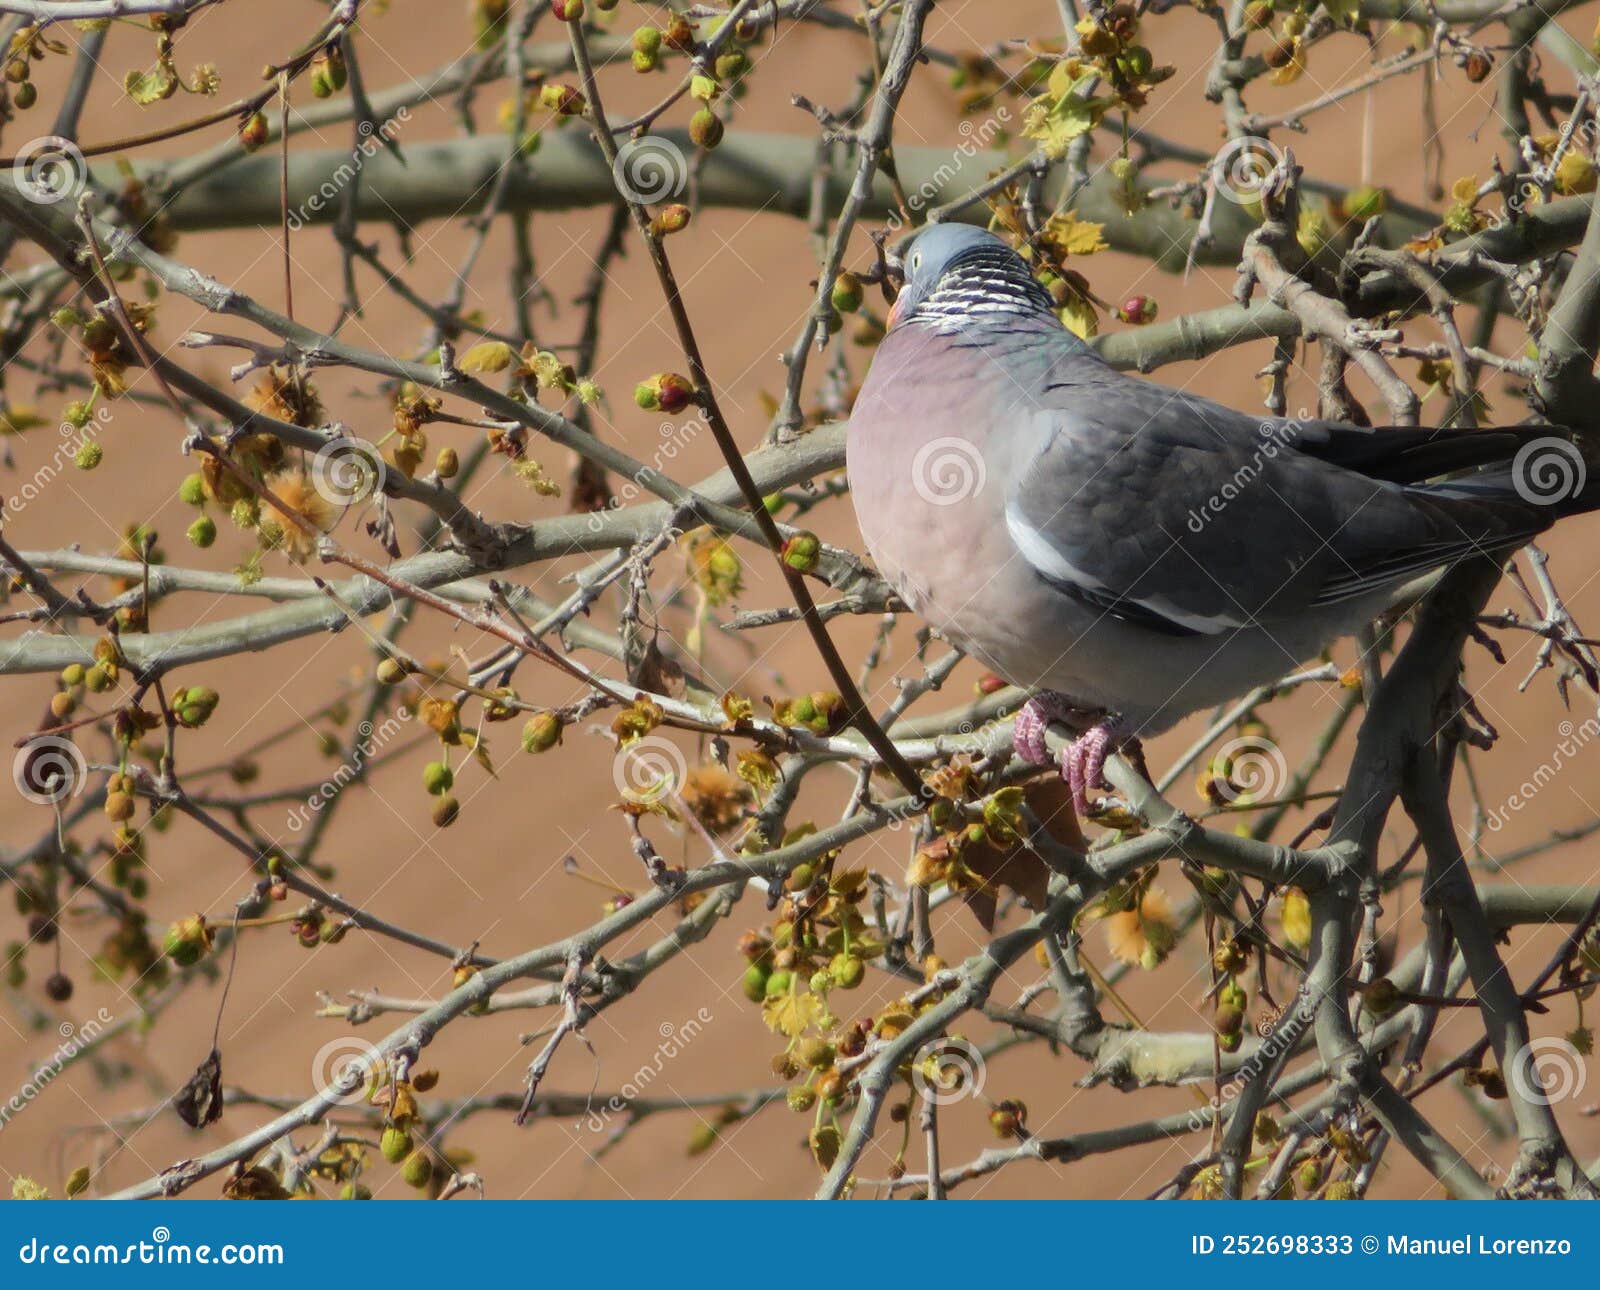 beautiful bird pigeon looking for flight animal food